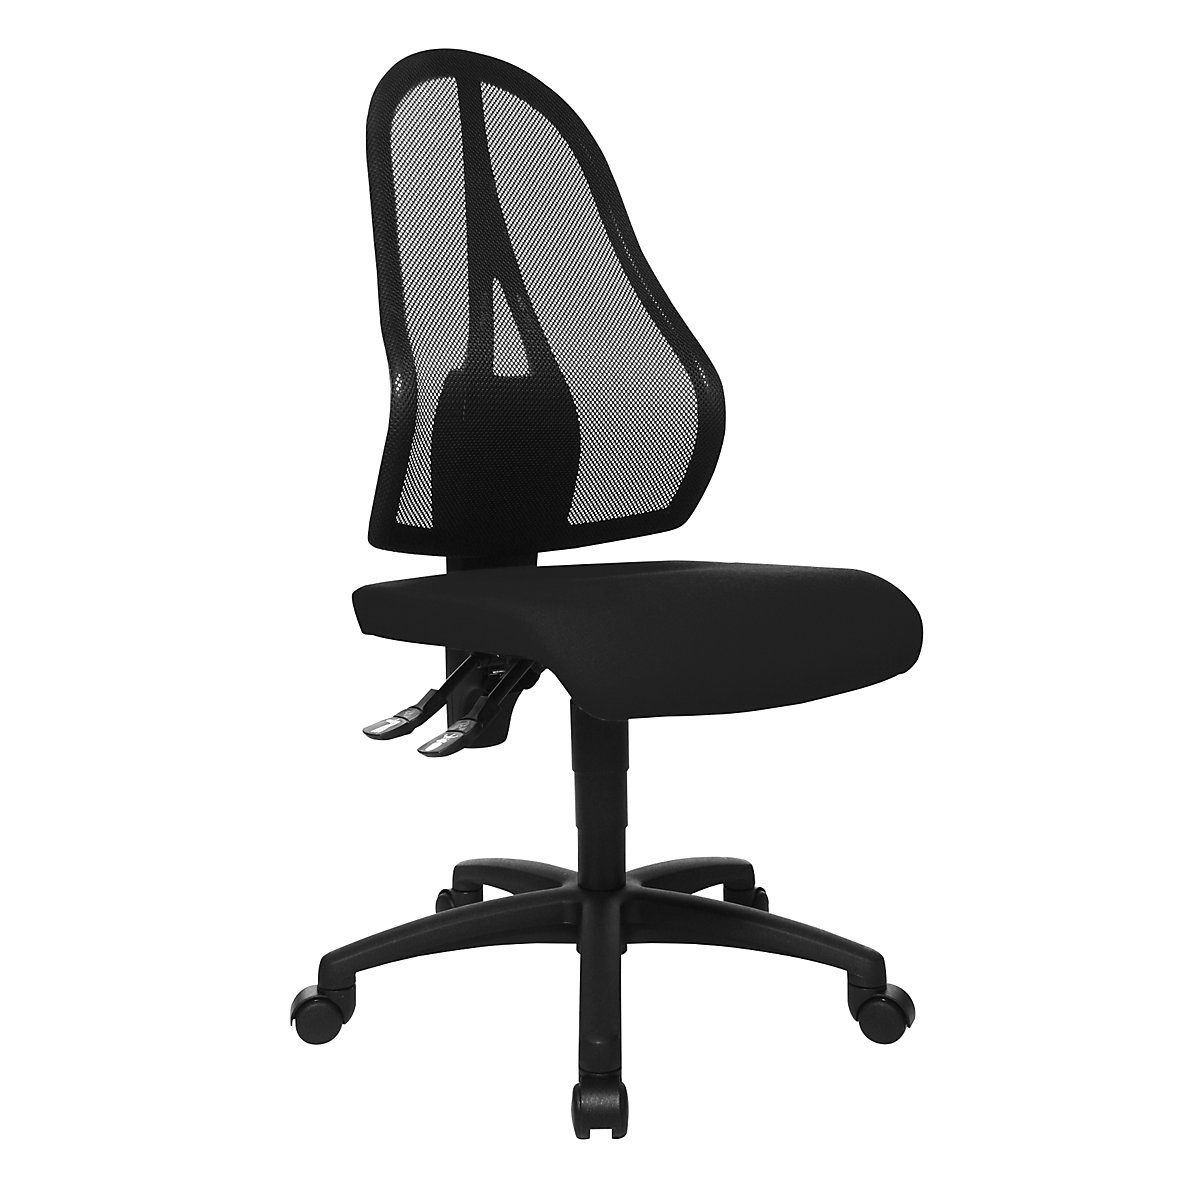 Kancelárska otočná stolička OPEN POINT P – Topstar, sieťové operadlo čierna, bez lakťových opierok, poťah sedadla čierna-5